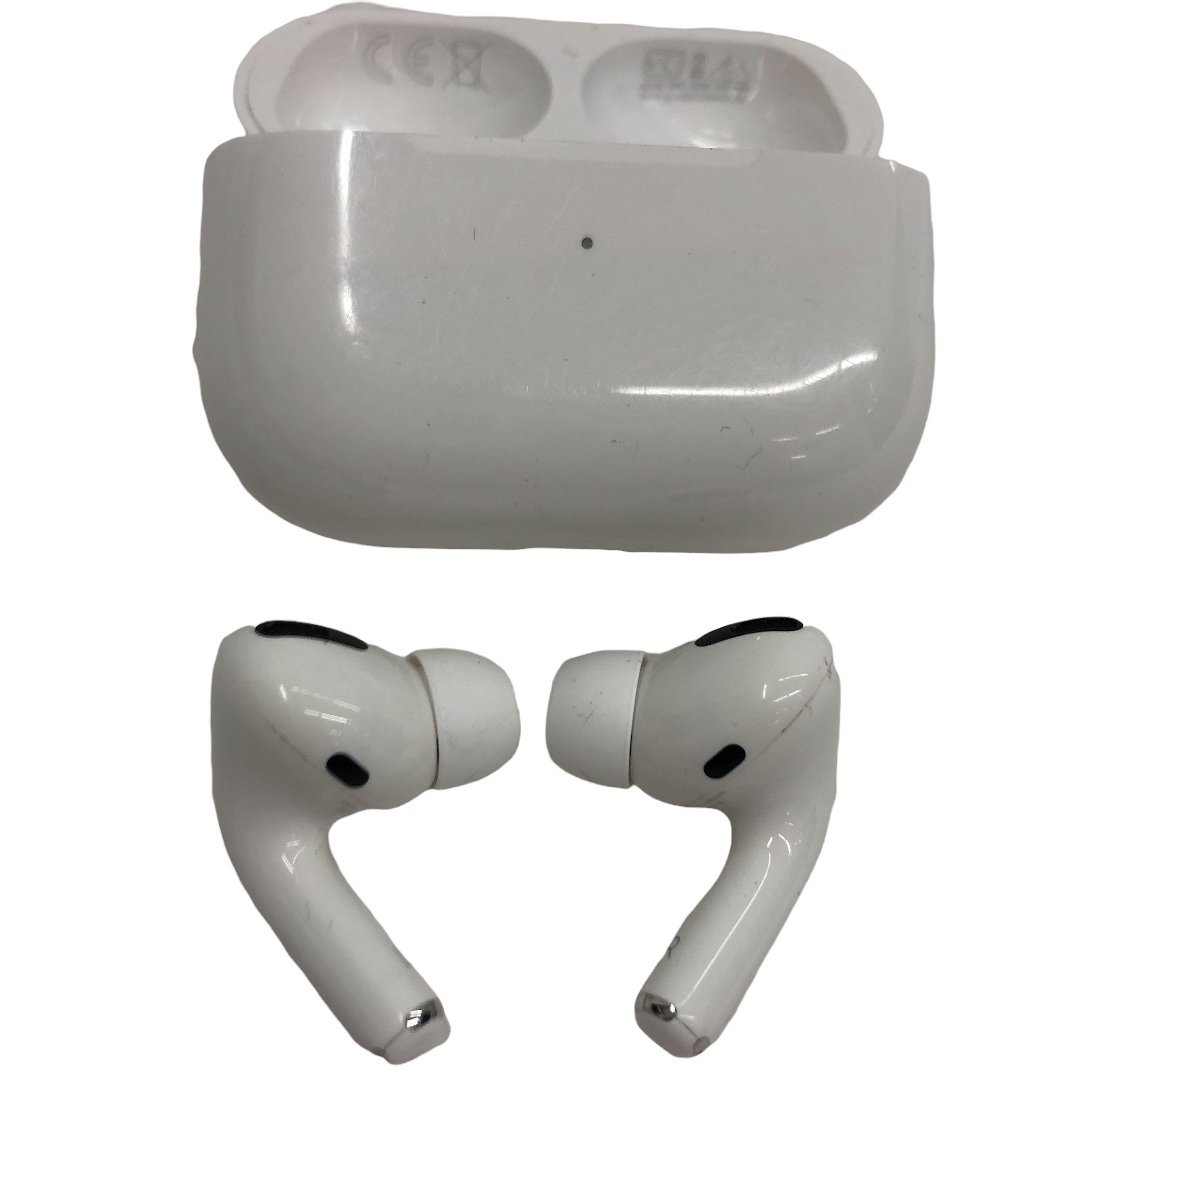 Apple(アップル) AirPods Pro with Wireless Charging Case ワイヤレスイヤホン MWP22J/A ホワイト 箱・充電ケーブル・イヤチップ完備/078_画像4